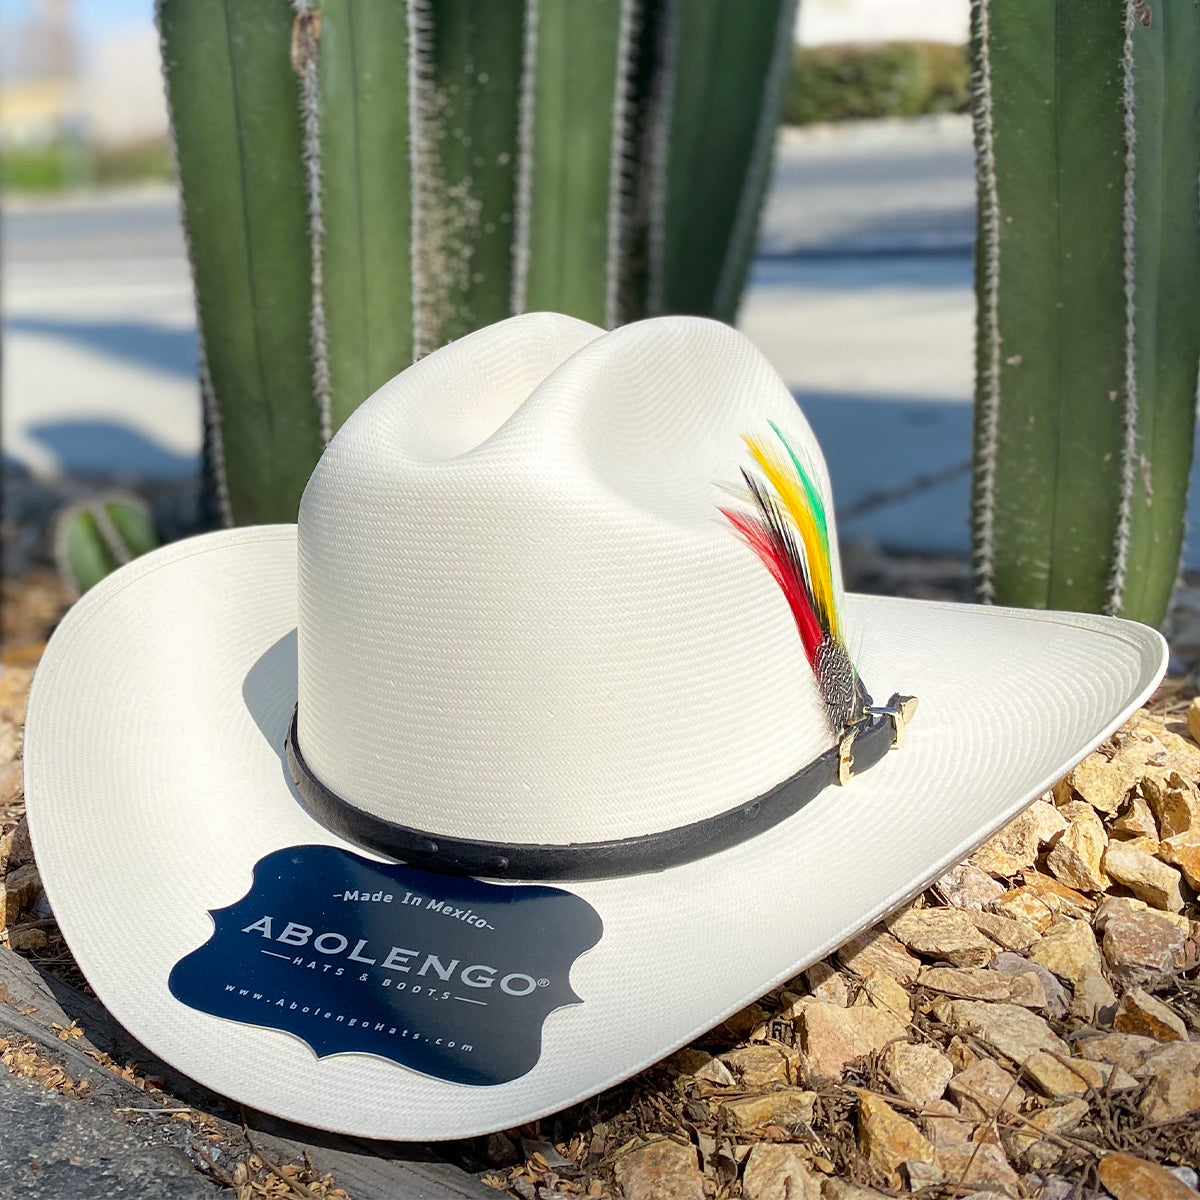 Abolengo El Navegante 10000x Sinaloa Hat